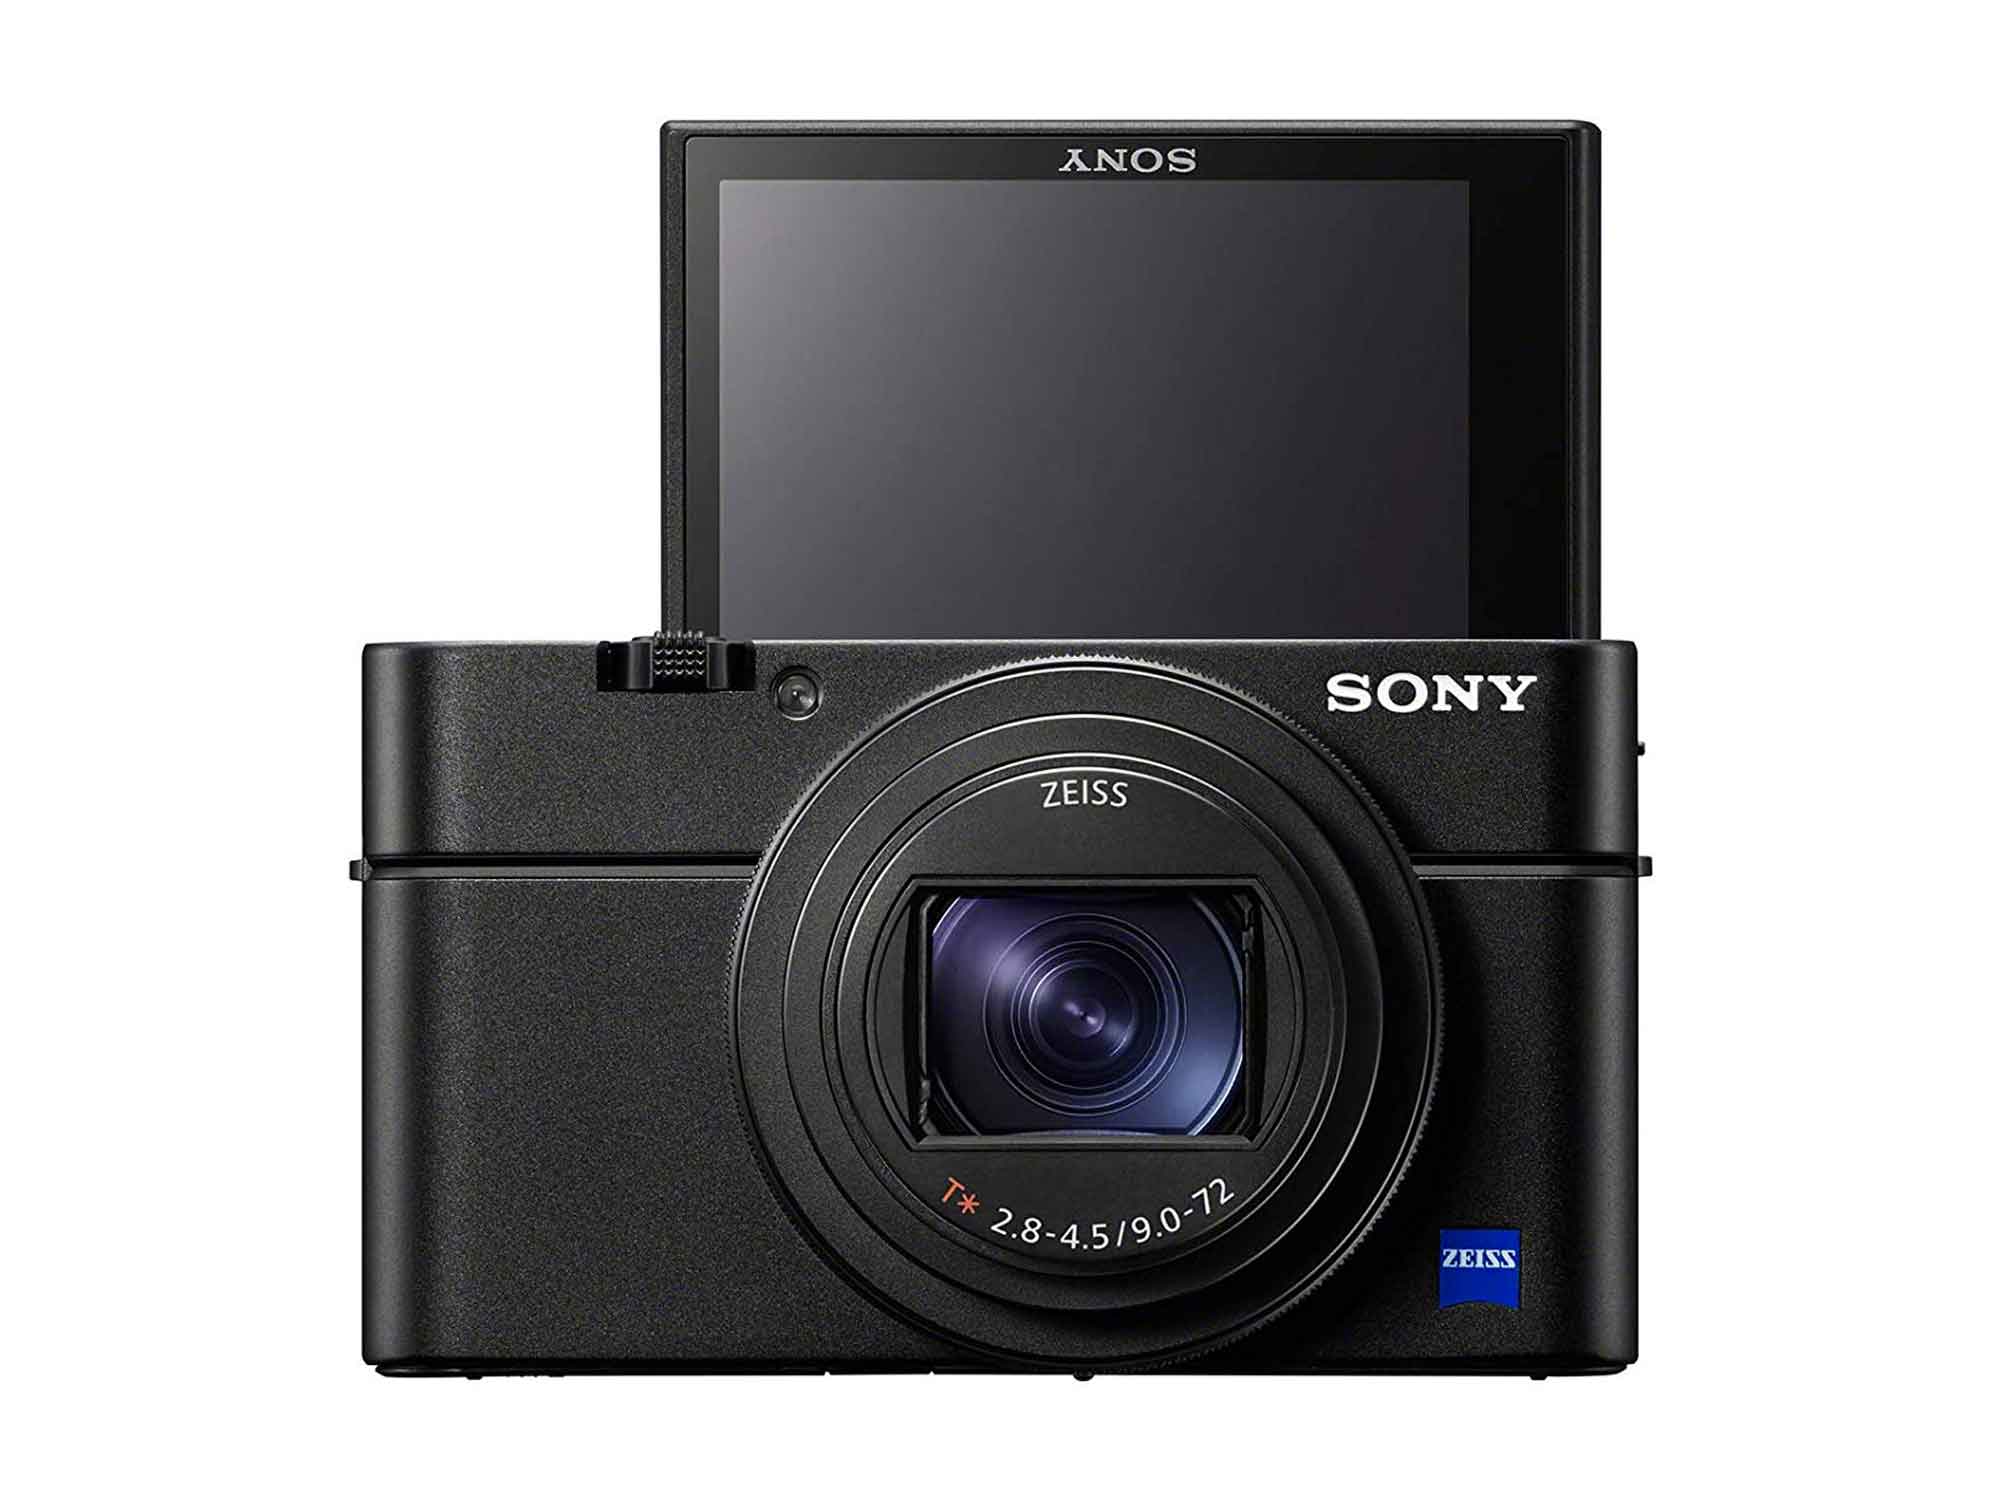 Sony RX100 digital camera